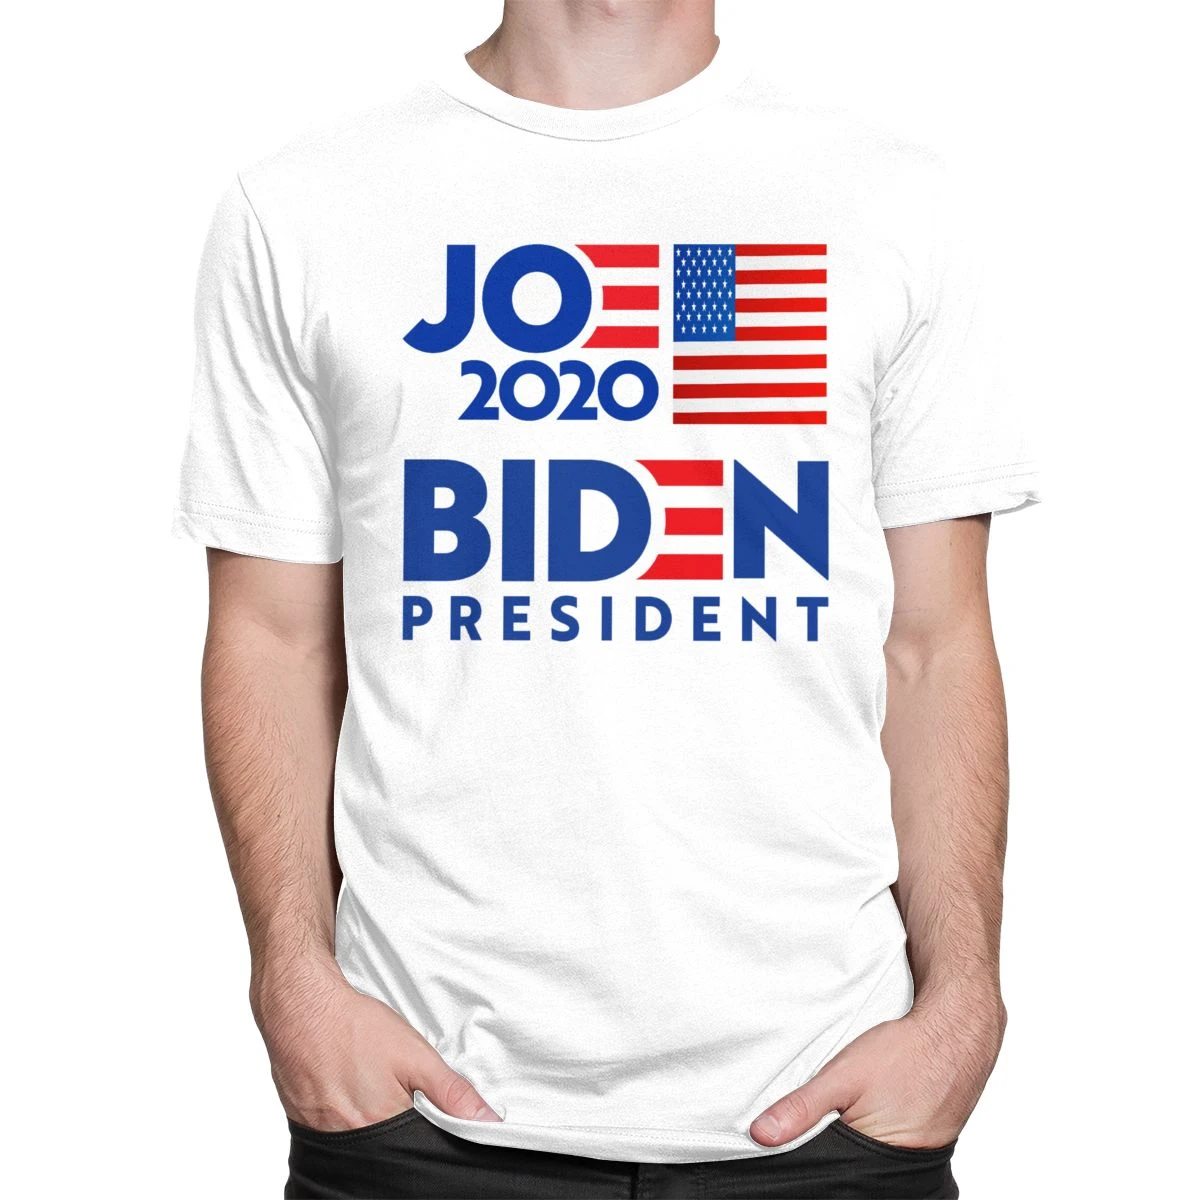 Joe-Biden-2020-Vote-T-Shirt-for-Men-Pre-shrunk-Cotton-Leisure-T-shirt-Fashion-Short.jpg_Q90.jpg_.webp